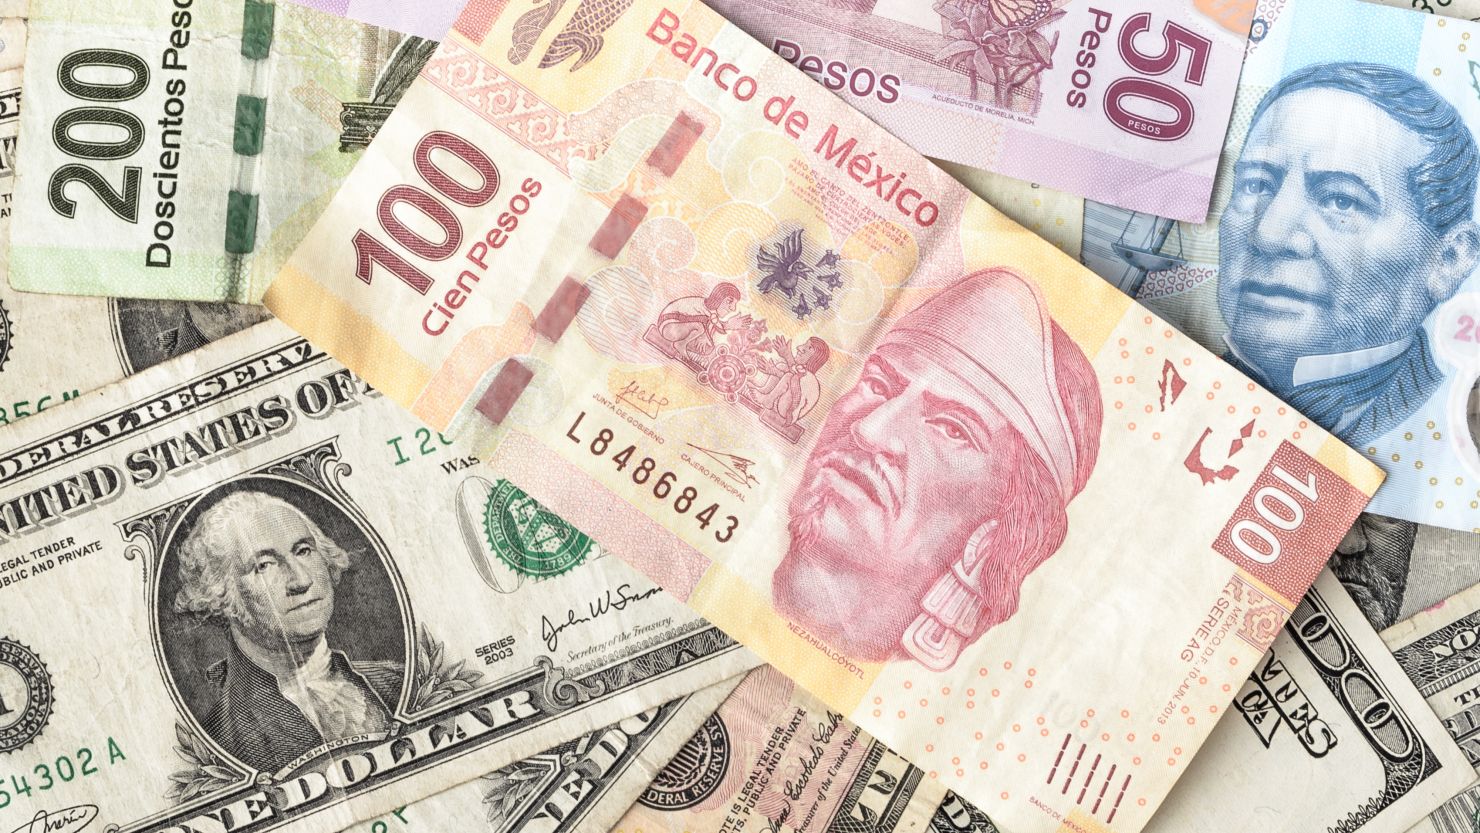 pesos and dollars